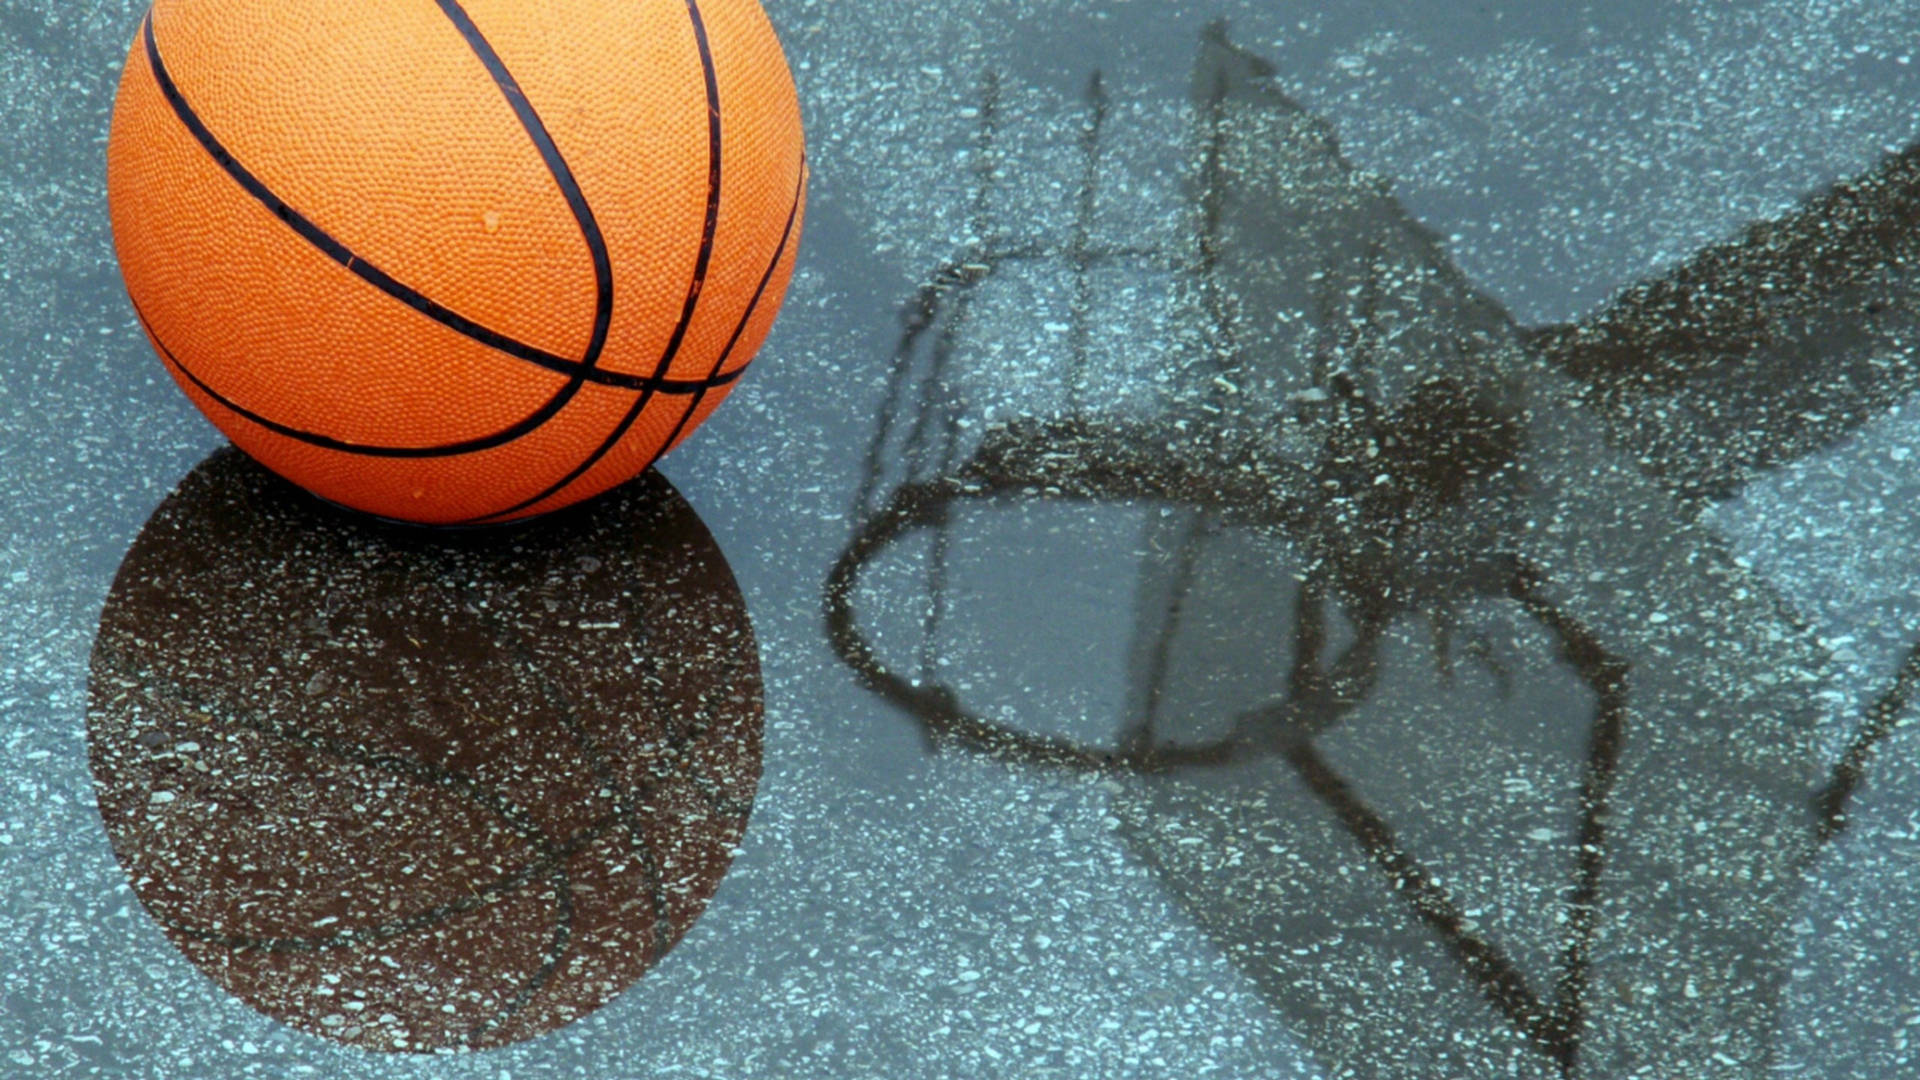 Hd Basketball Ball In Wet Ground